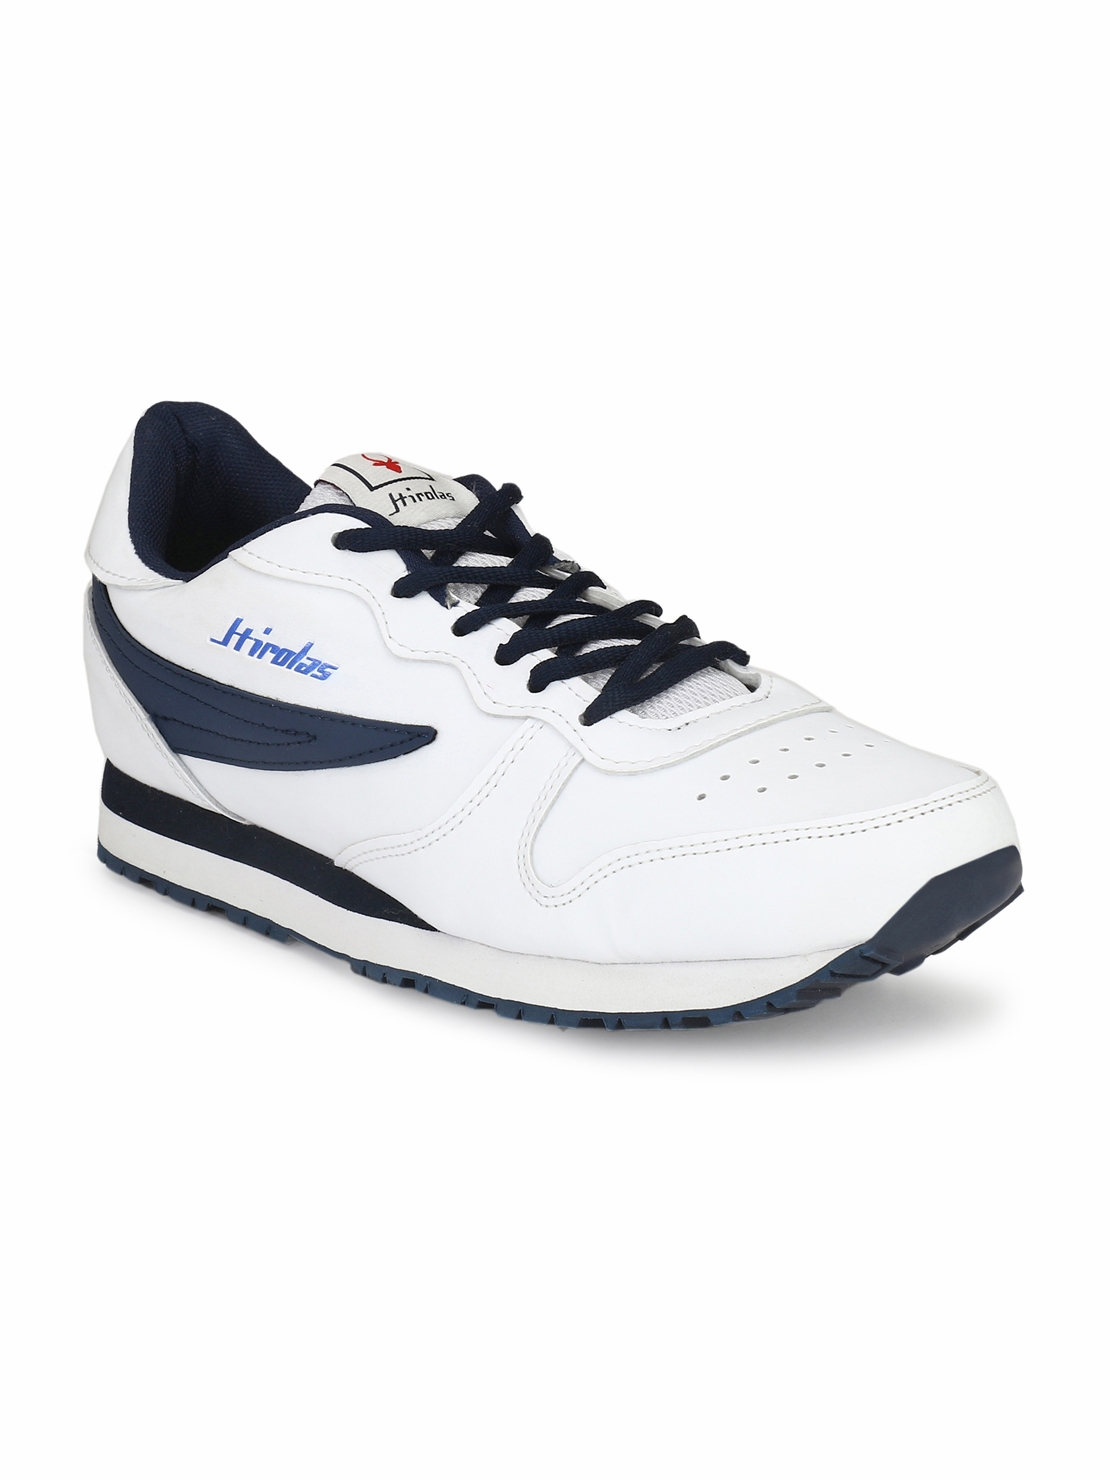 Hirolas | Hirolas Men's Multisport Jogger Shoes- White